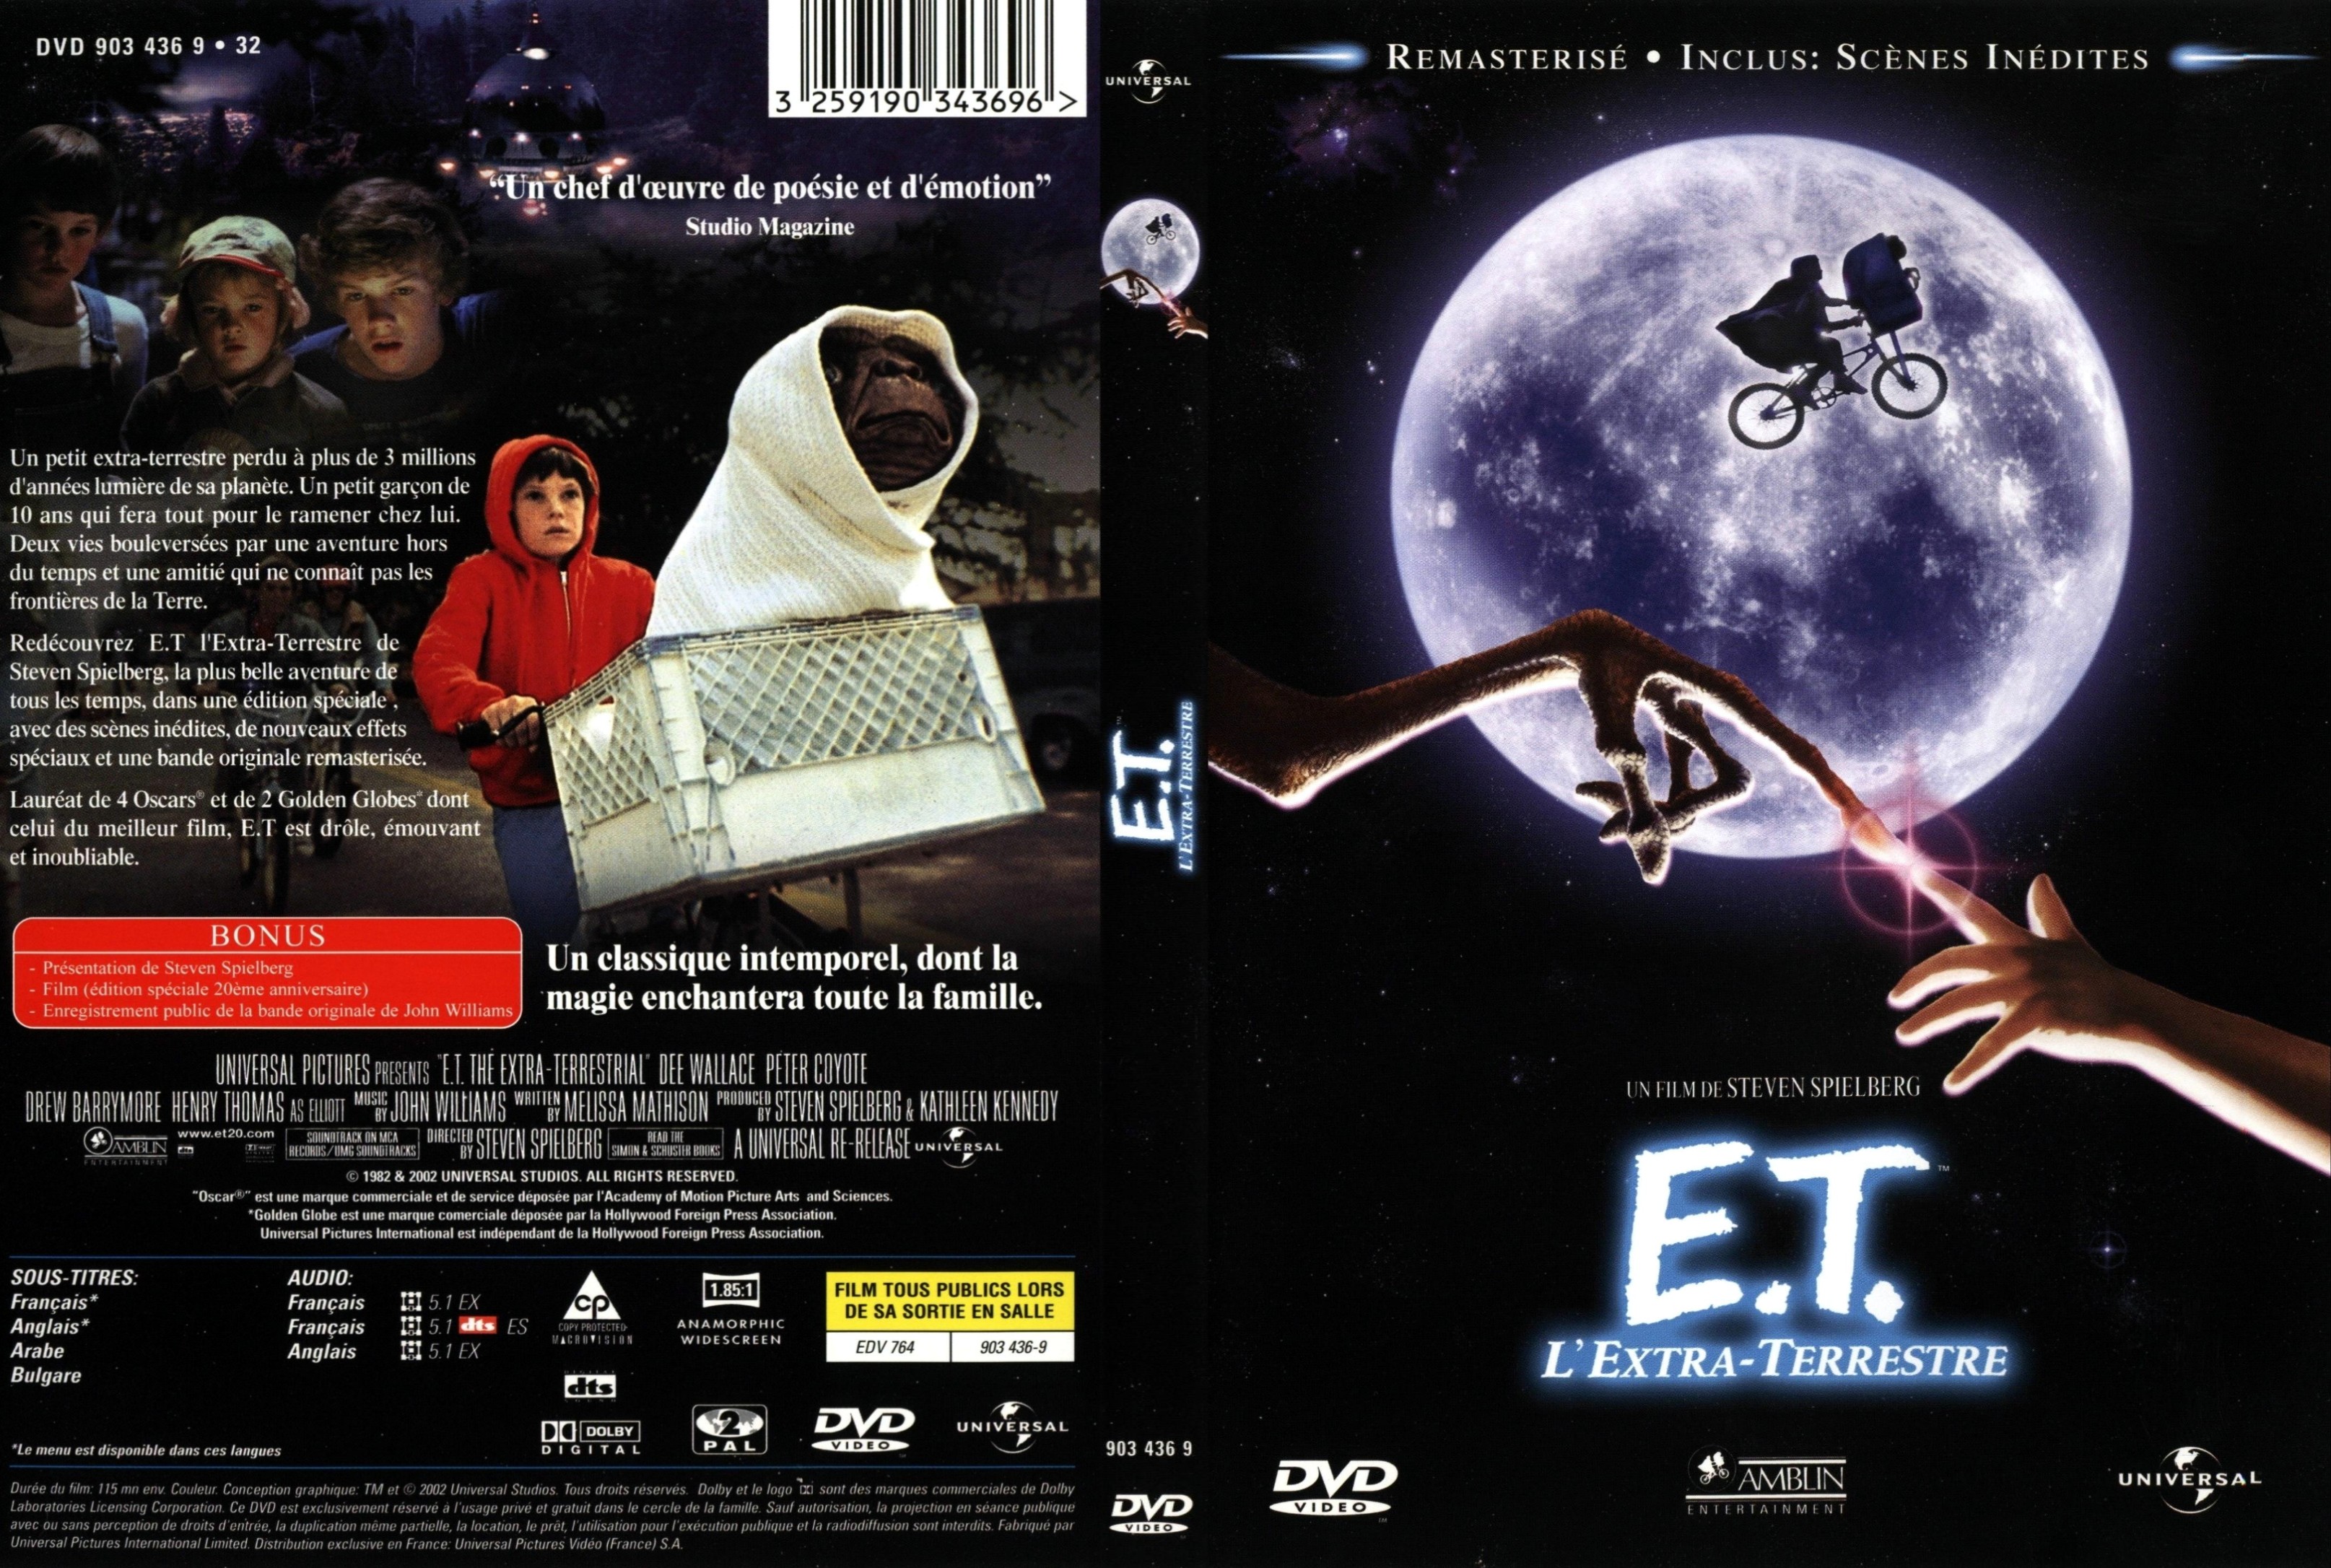 Jaquette DVD E.T. L